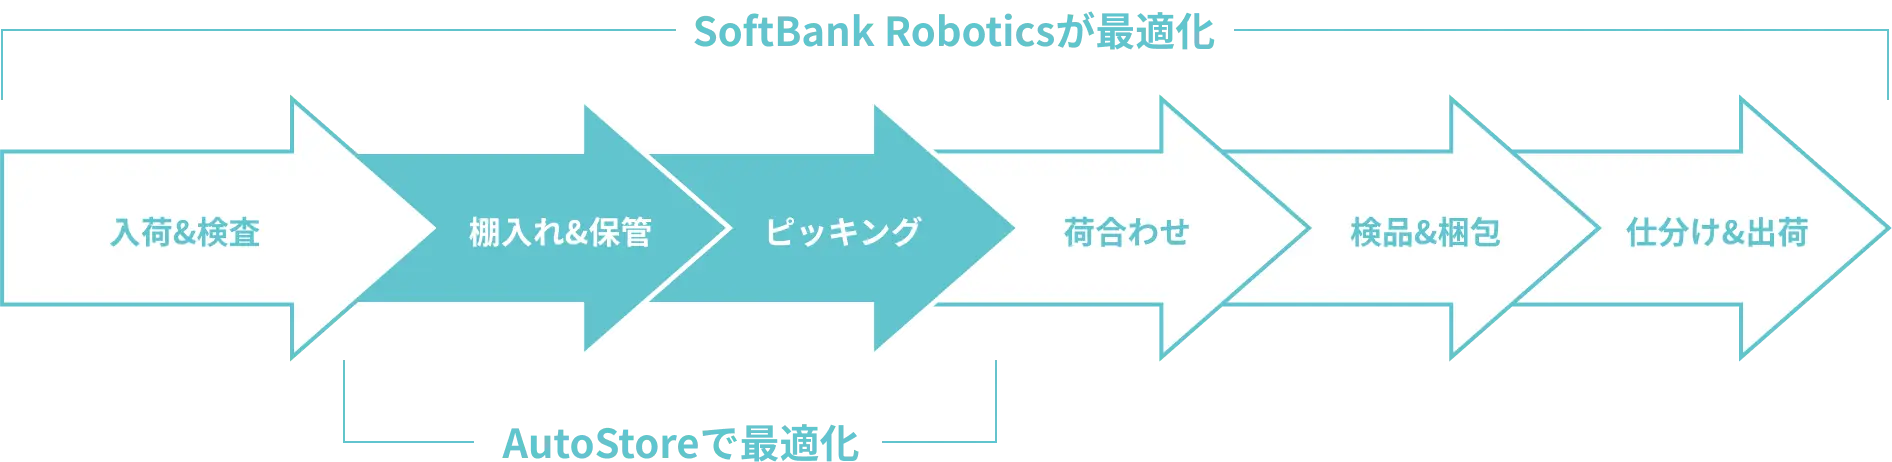 SoftBank Roboticsが最適化：入荷検品 → 棚入れ保管 → ピッキング → 荷合わせ → 検品 → 仕分け入荷 棚入れ保管からピッキングをAutoStoreで最適化